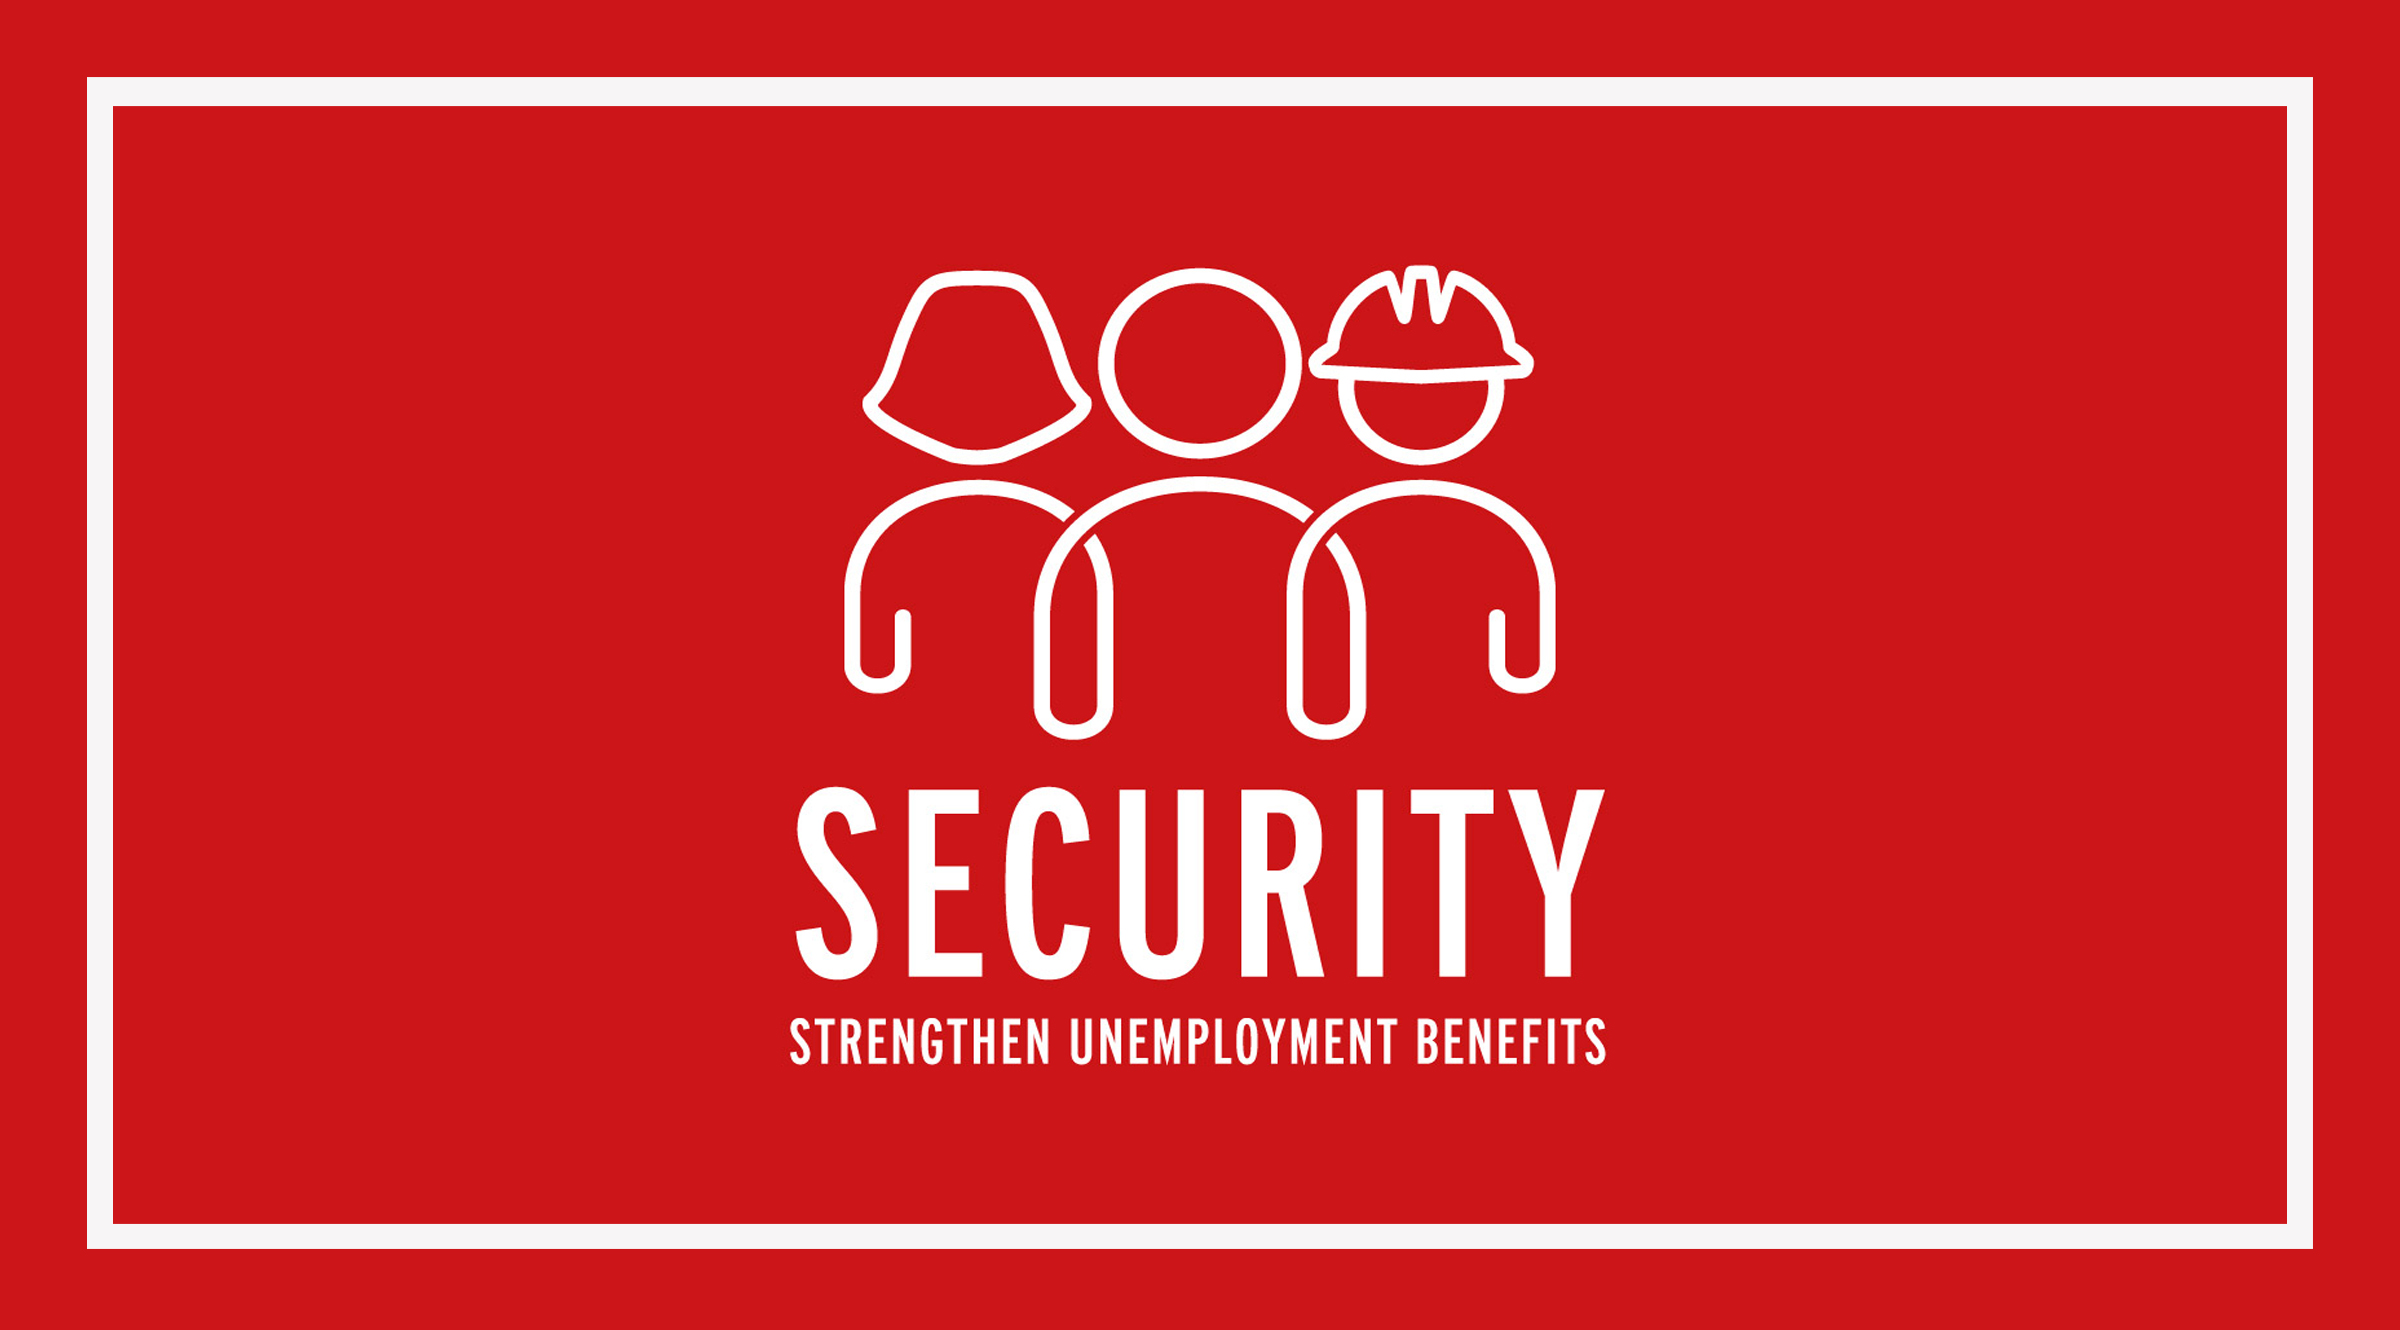 Security unemployment benefits